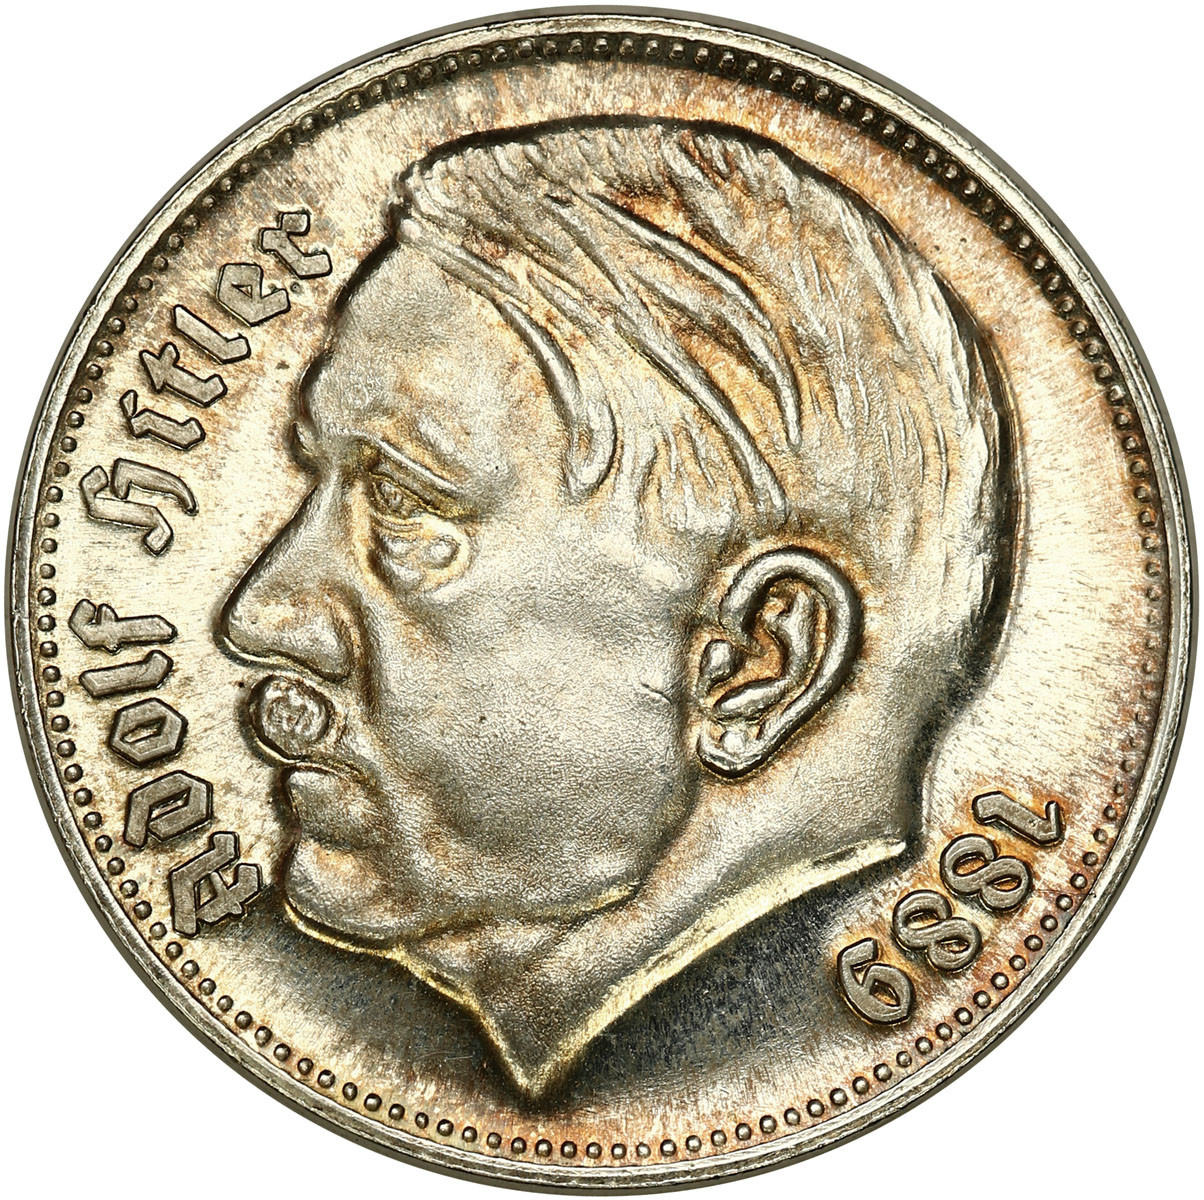 Niemcy, III Rzesza. Medal A. Hitler 1938, srebro